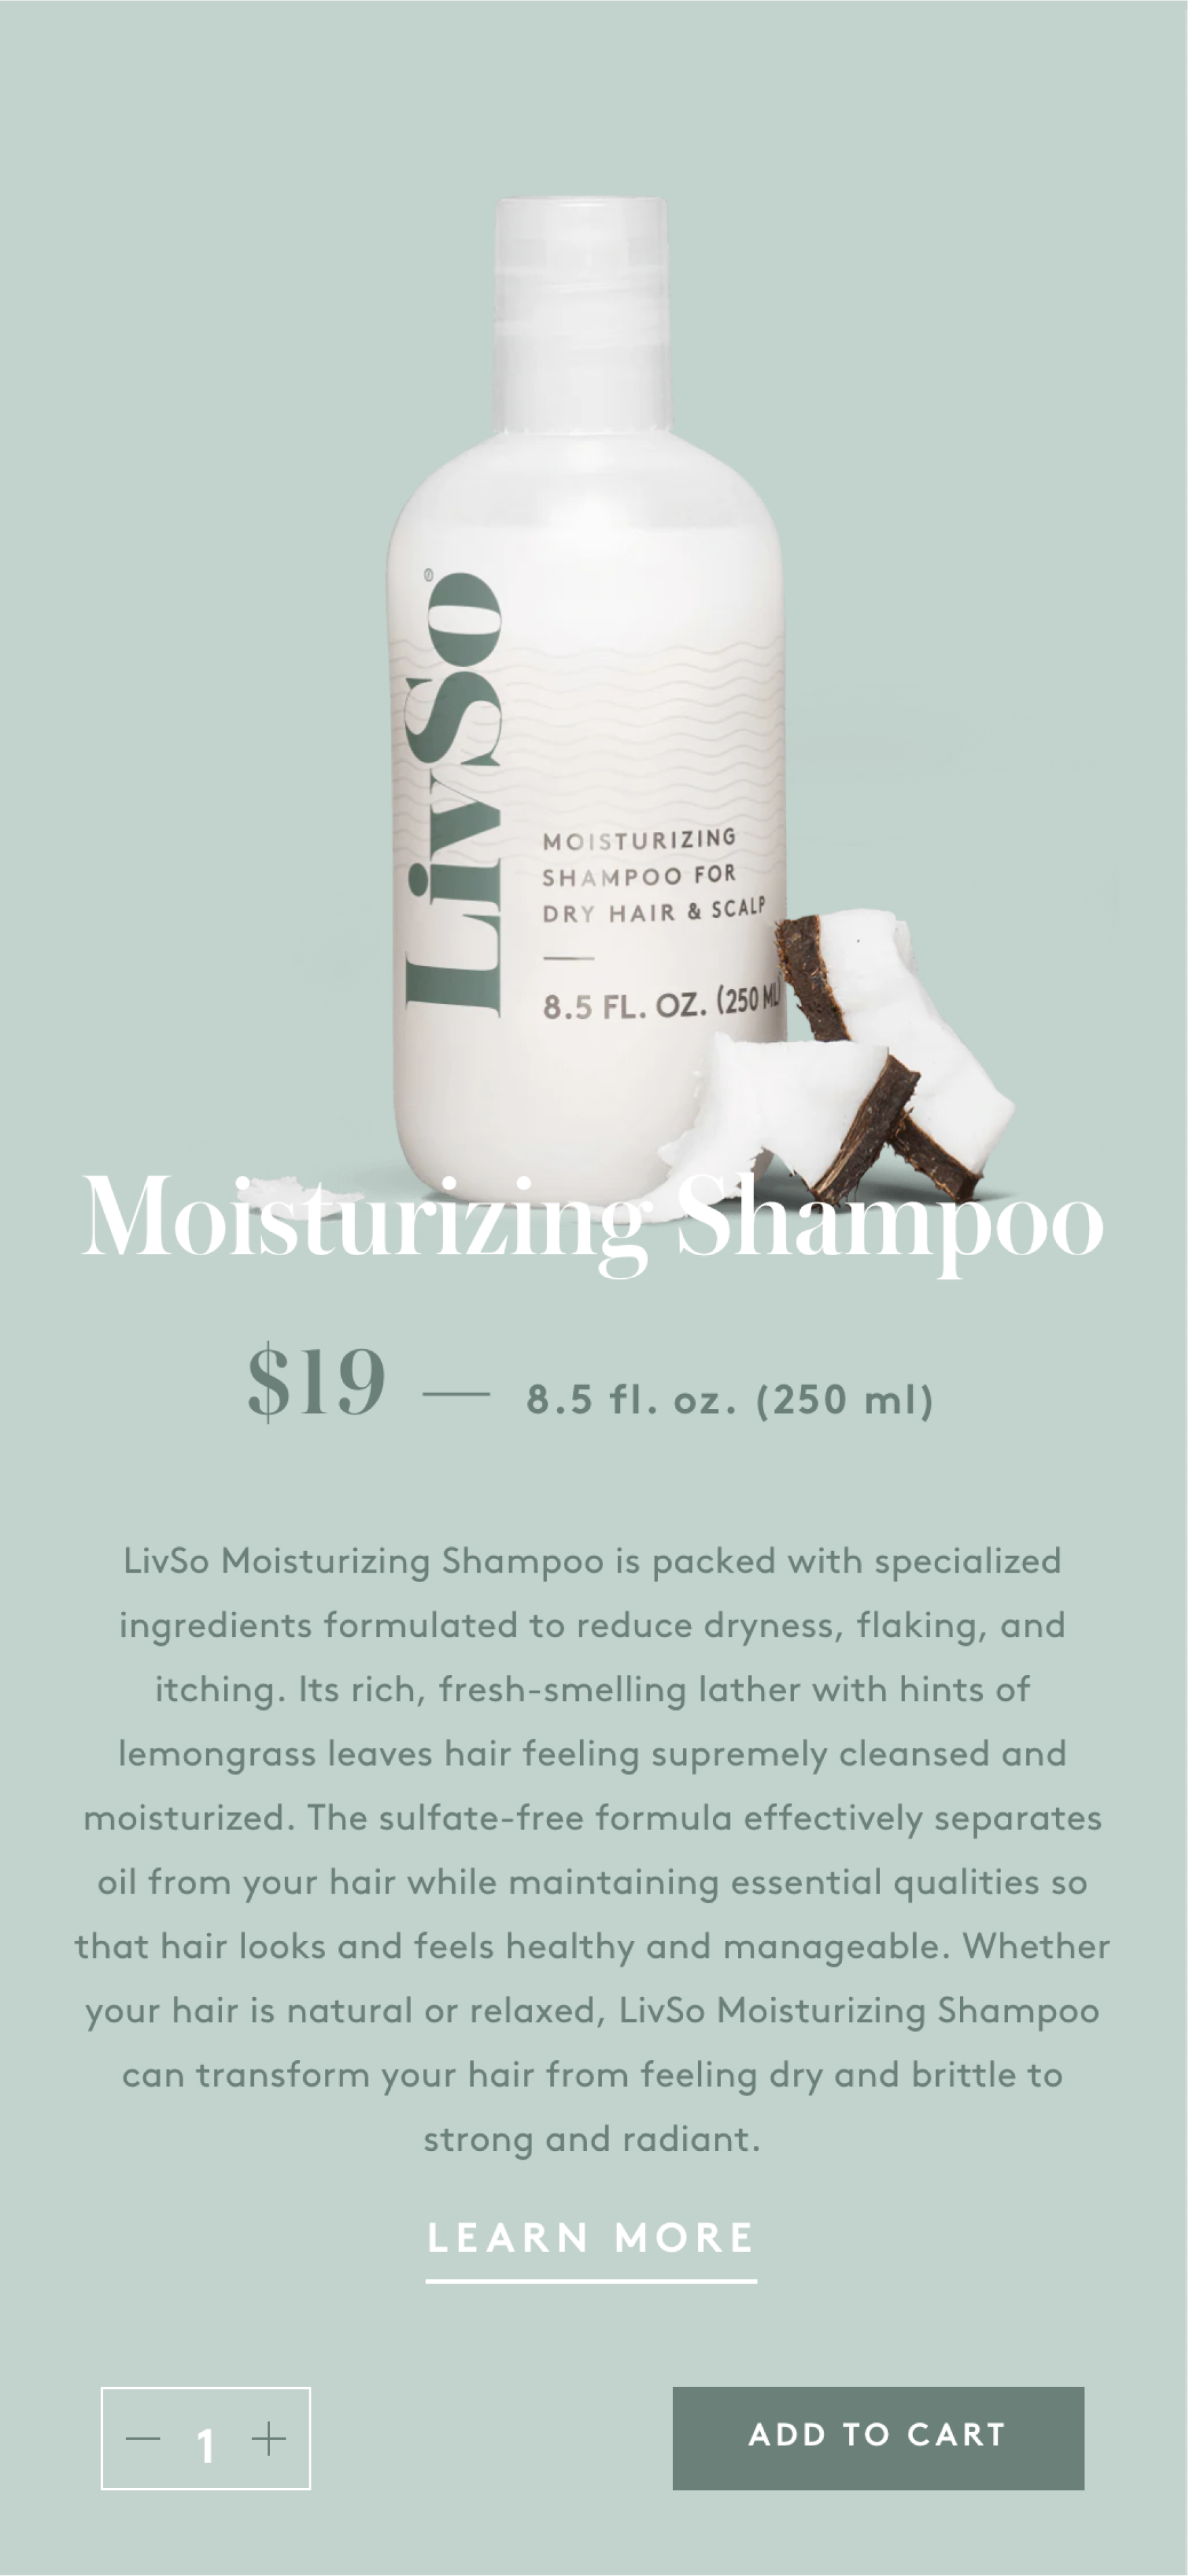 Moisturizing Shampoo product detail page